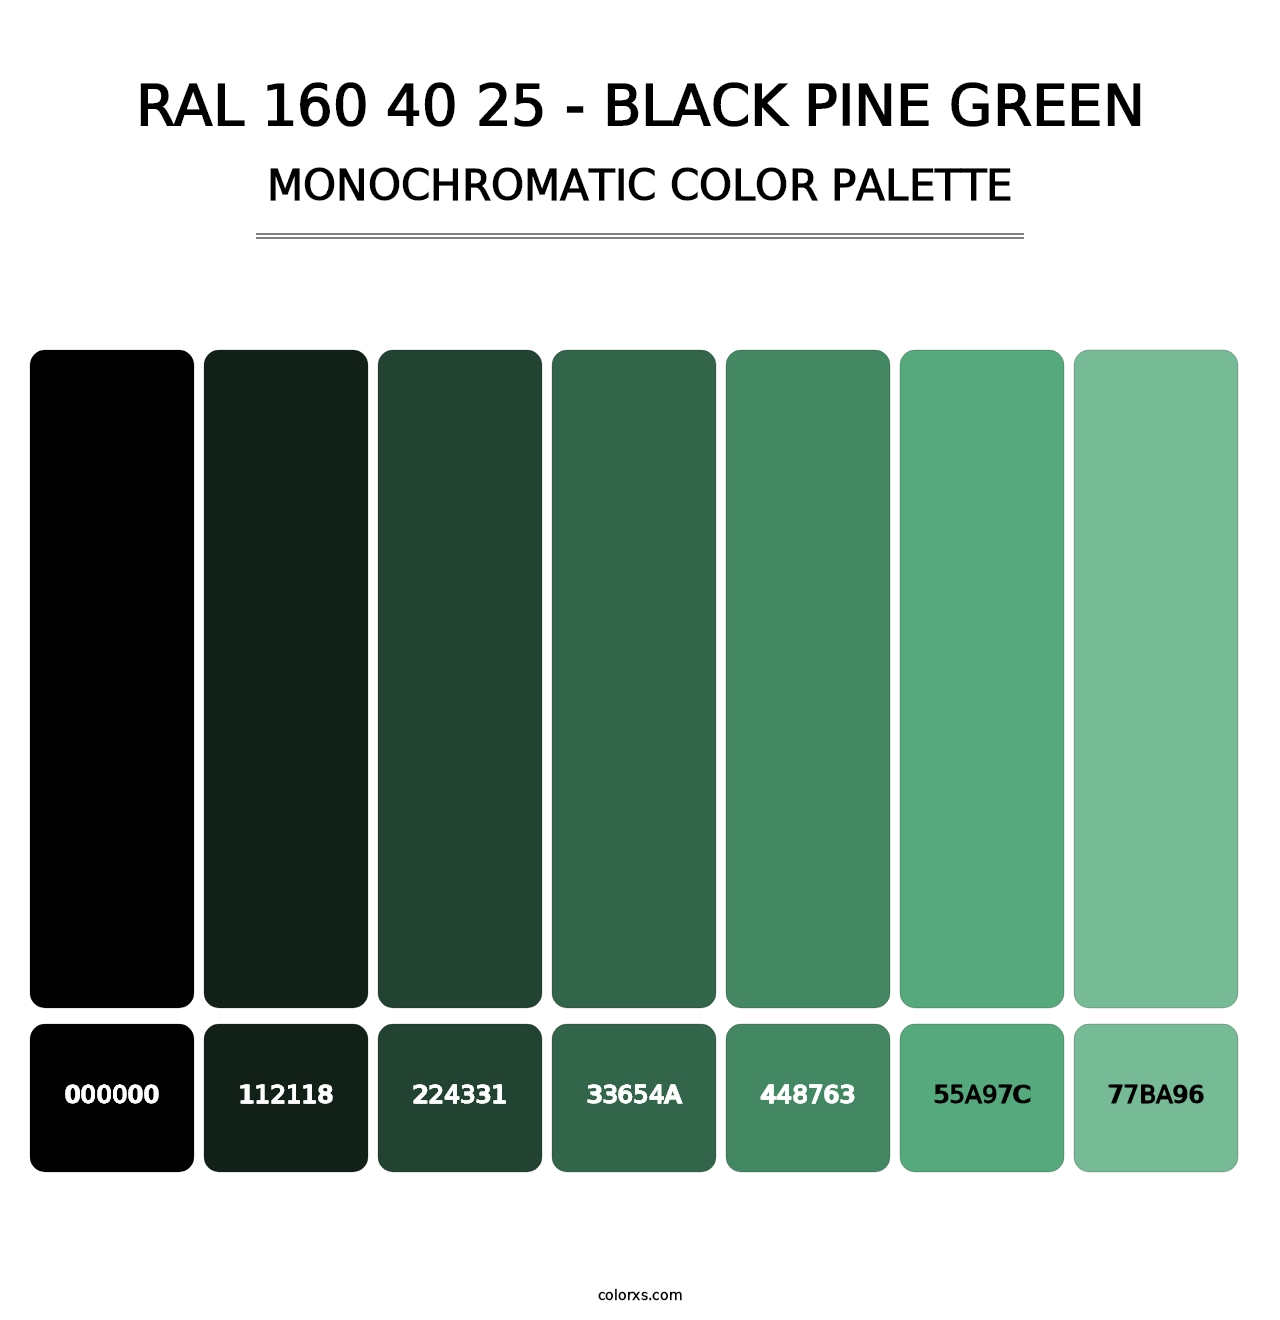 RAL 160 40 25 - Black Pine Green - Monochromatic Color Palette